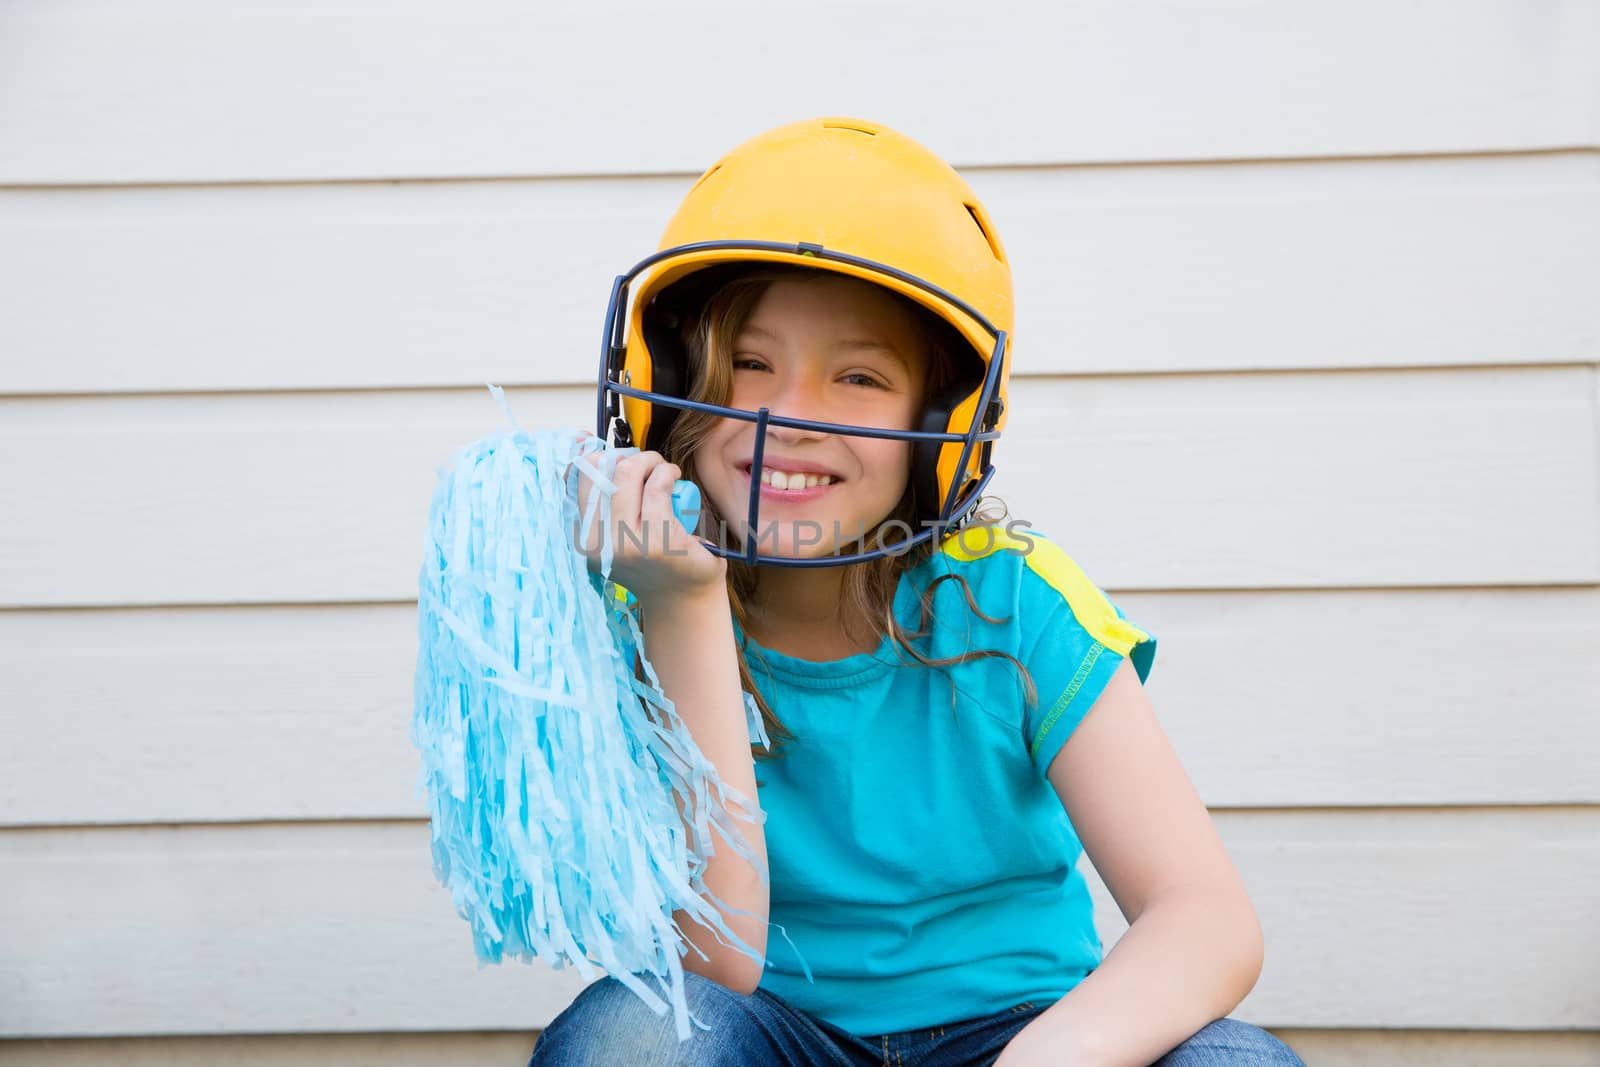 baseball cheerleading pom poms girl happy smiling with yellow helmet